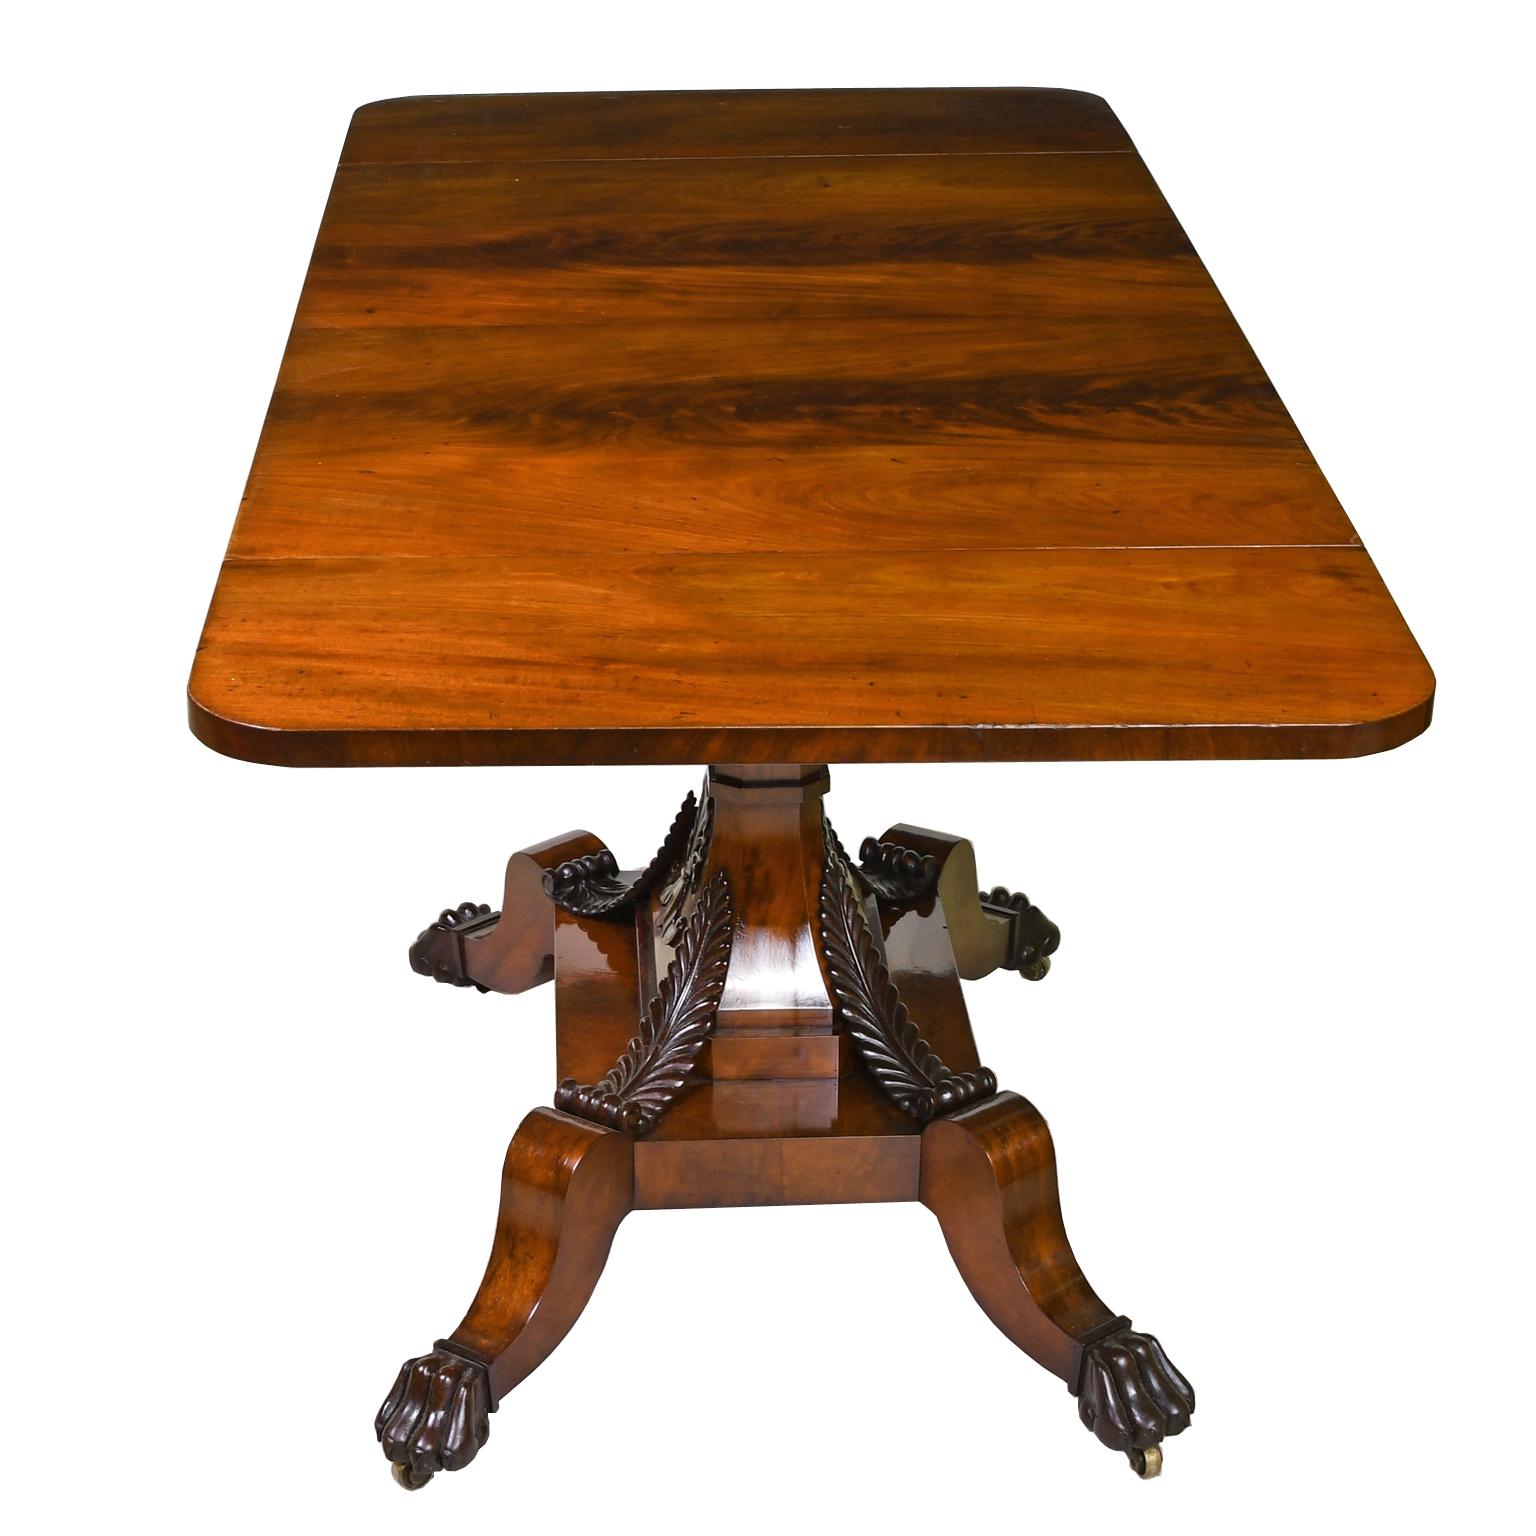  Swedish Karl Johan Salon/Sofa Table or Desk in West Indies Mahogany, c. 1825 For Sale 6